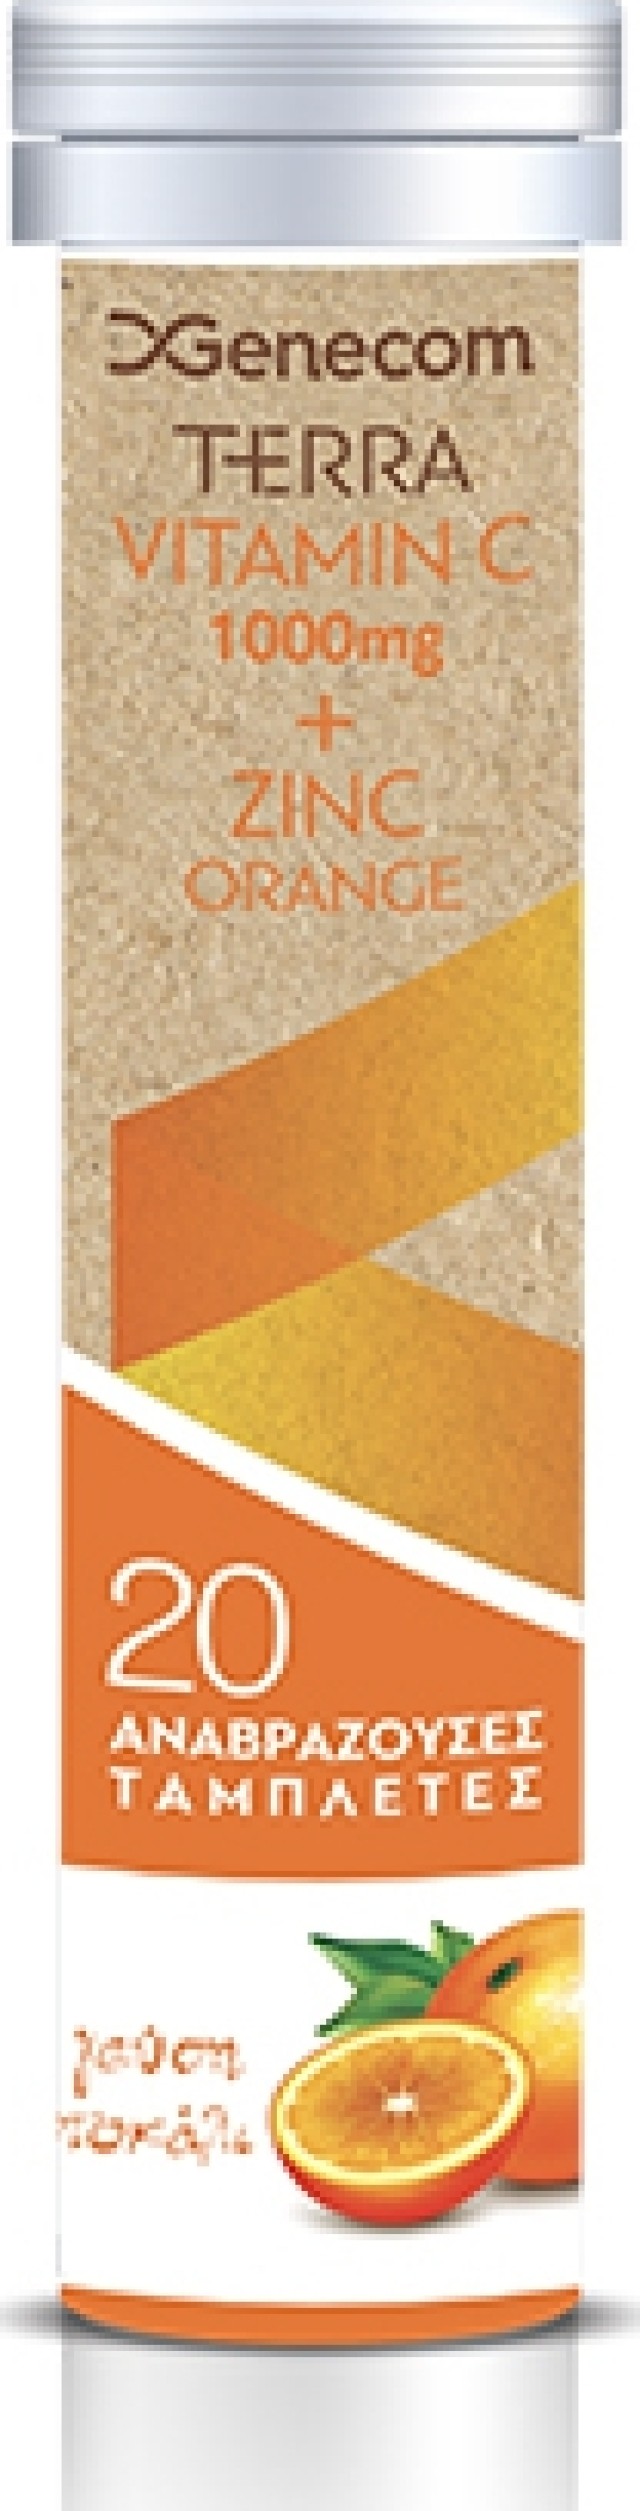 Genecom - Terra Vitamin C 1000mg + Zinc Orange γεύση πορτοκάλι 20 αναβράζουσες ταμπλέτες